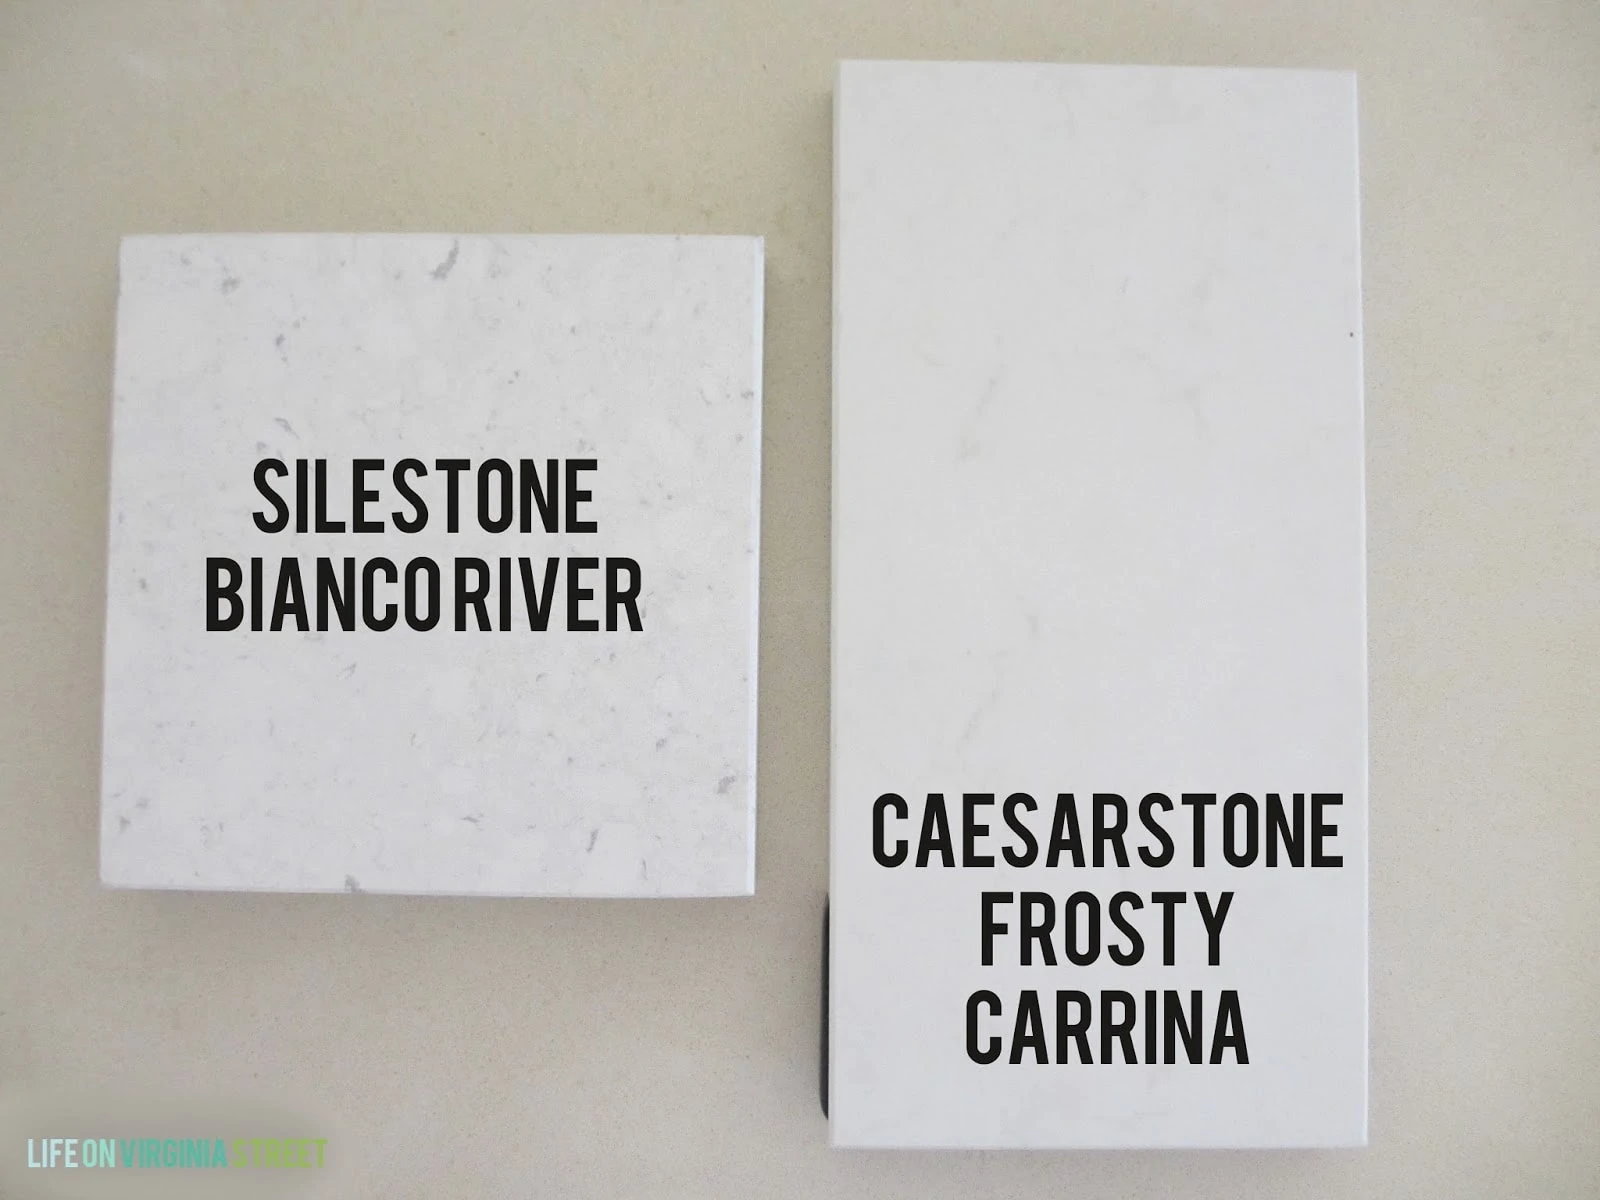 Silestone Bianco River and Caesarstone Frosty Carrina samples